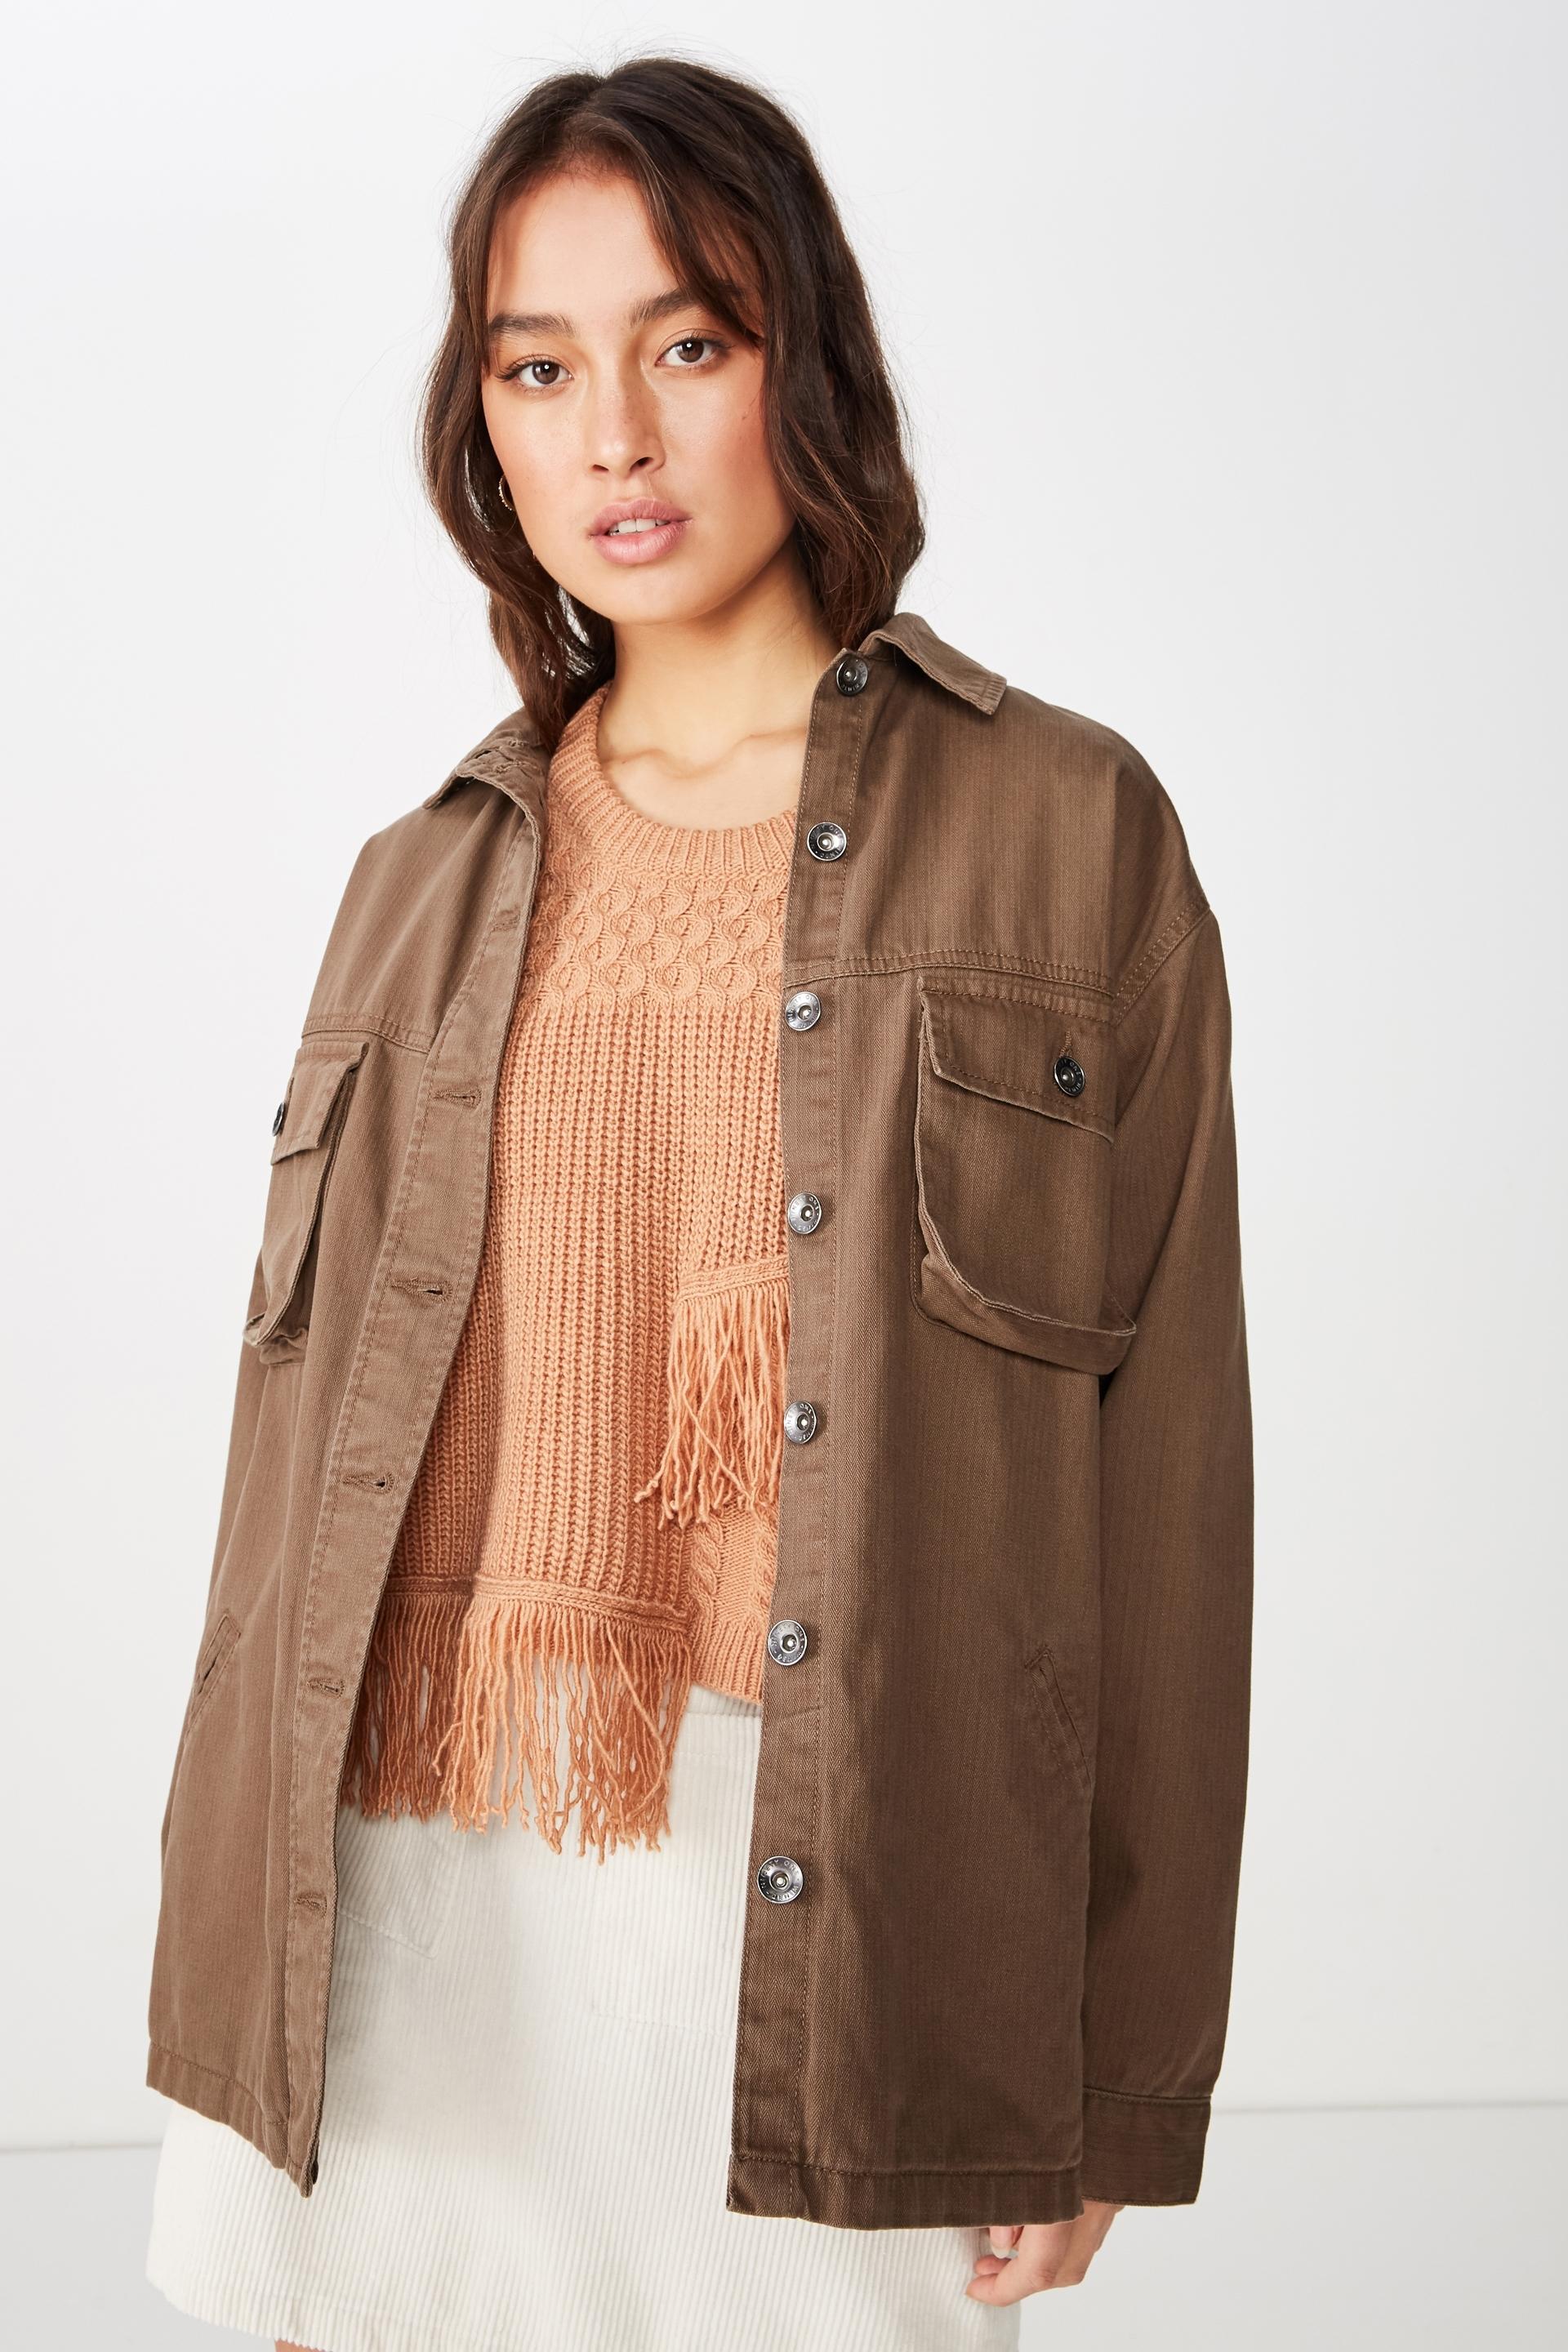 Workwear jacket - brownie Cotton On Jackets | Superbalist.com